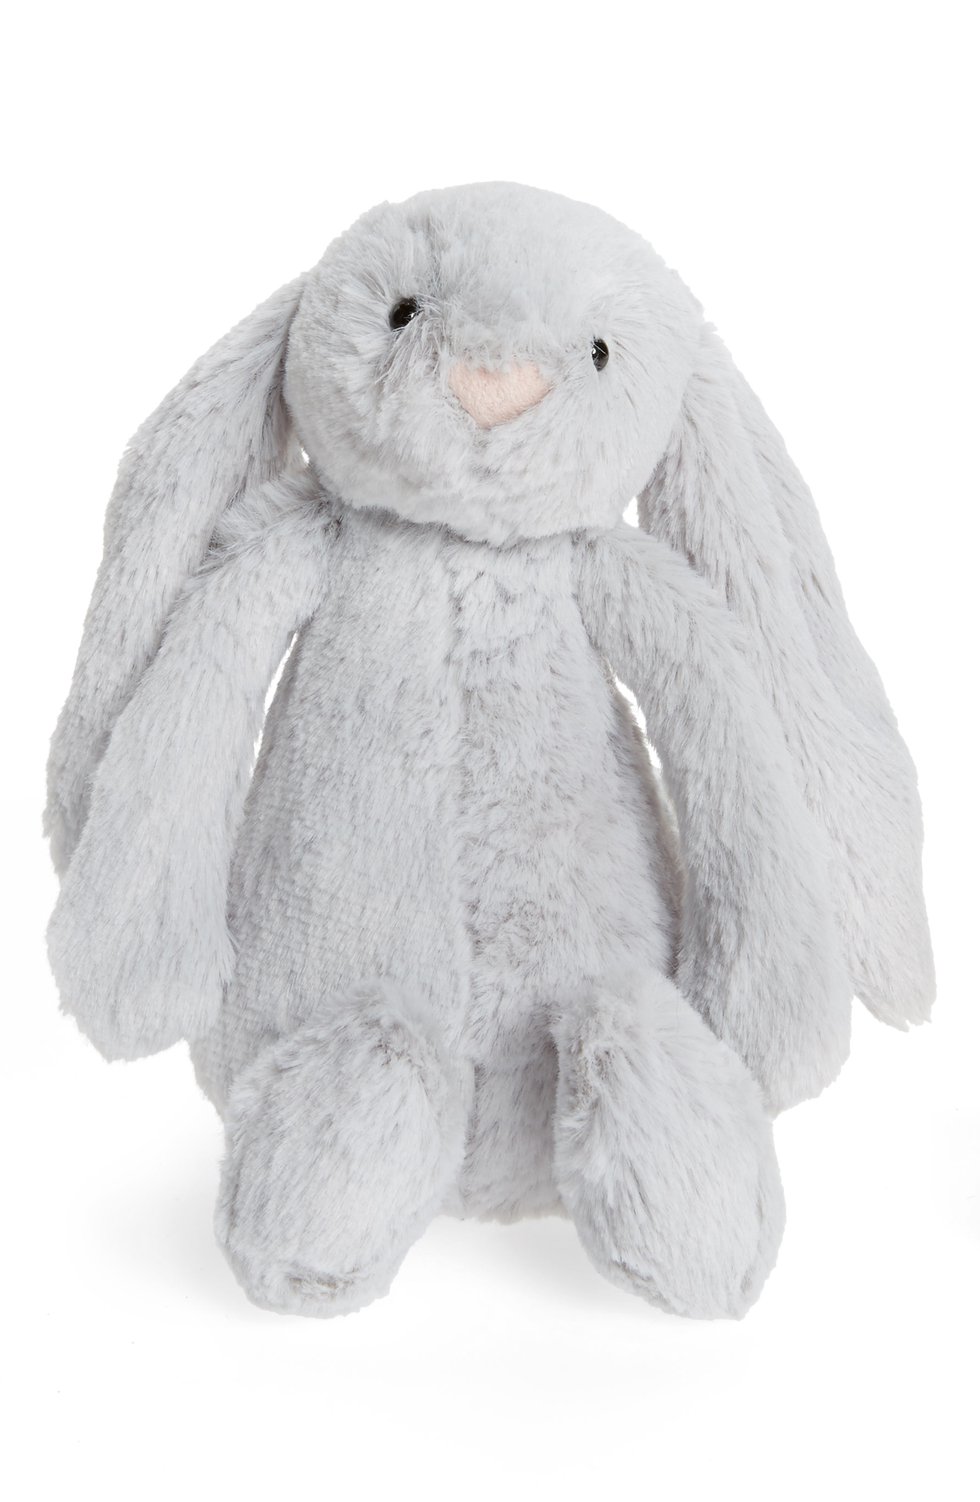 Copy of Jellycat_'Small Bashful Bunny' Stuffed Animal_$16.50_Nordstrom.jpeg